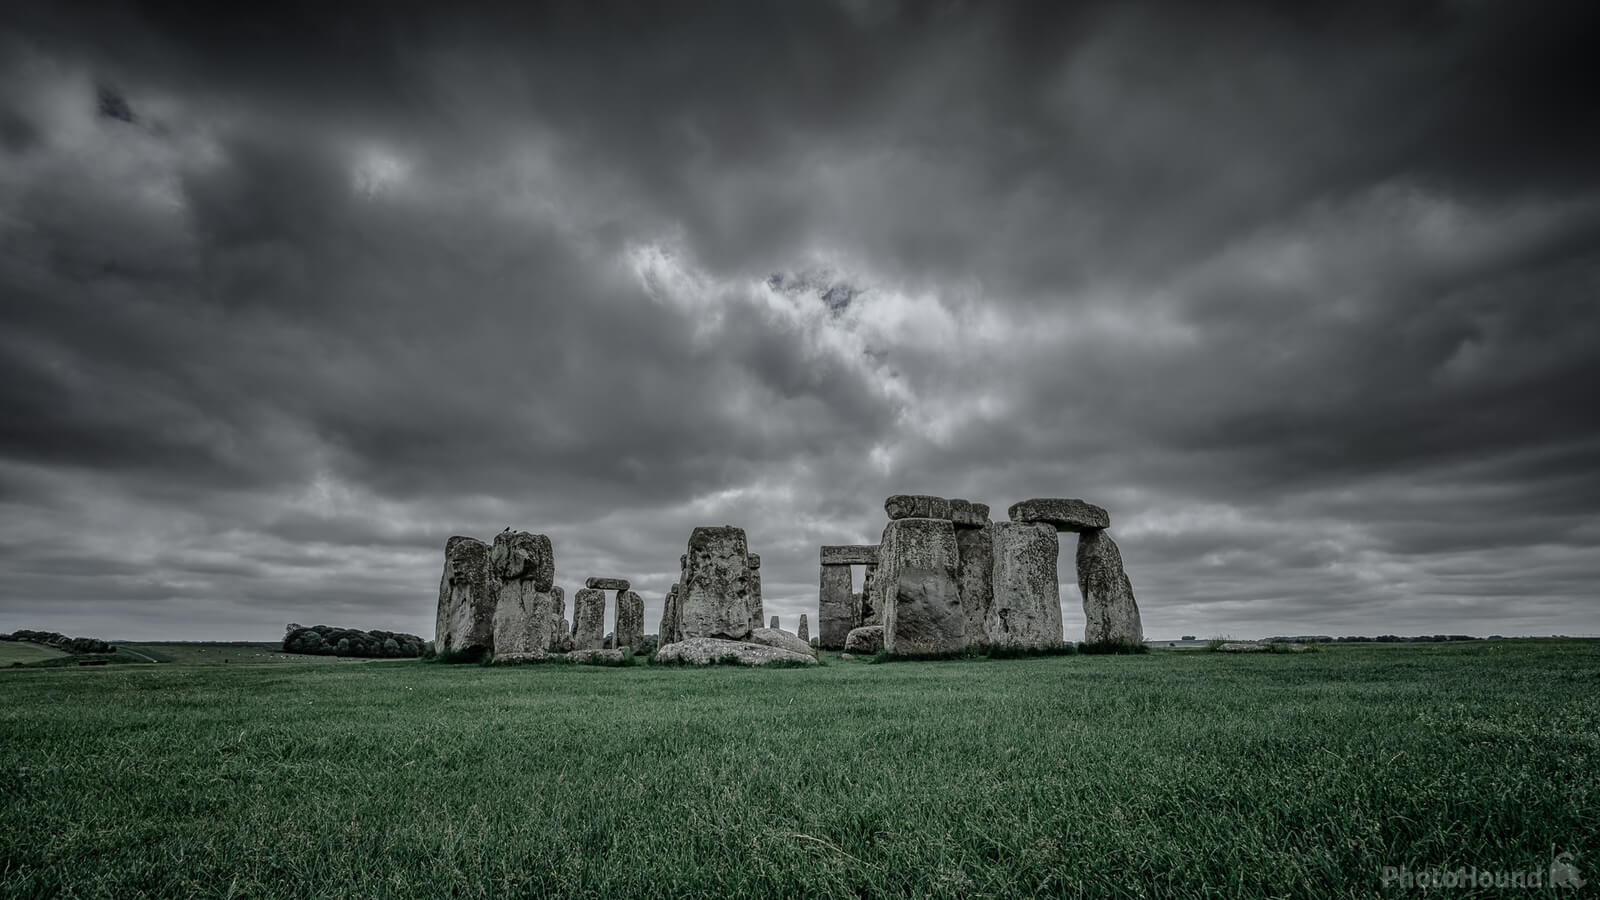 Image of Stonehenge by James Billings.